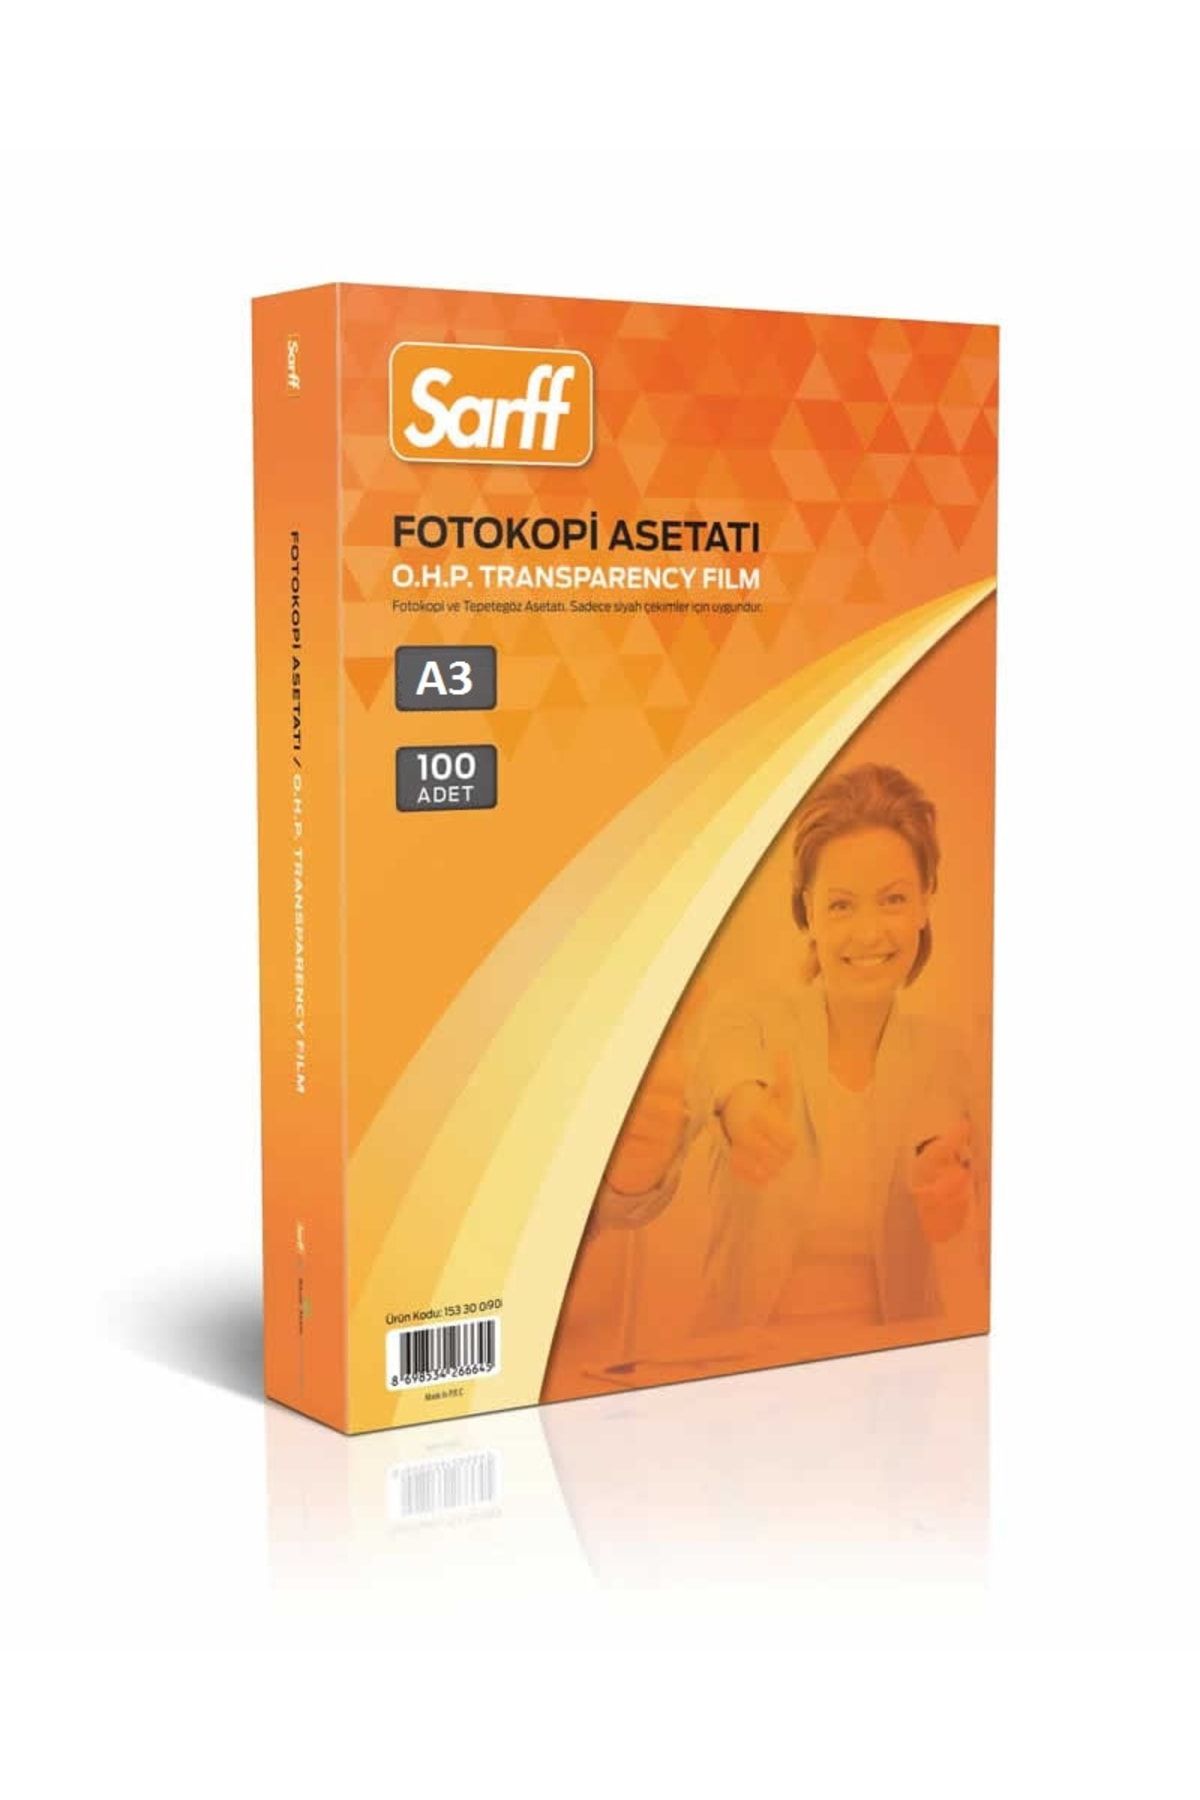 SARFF Fotokopi Asetatı A3 100 Ad.